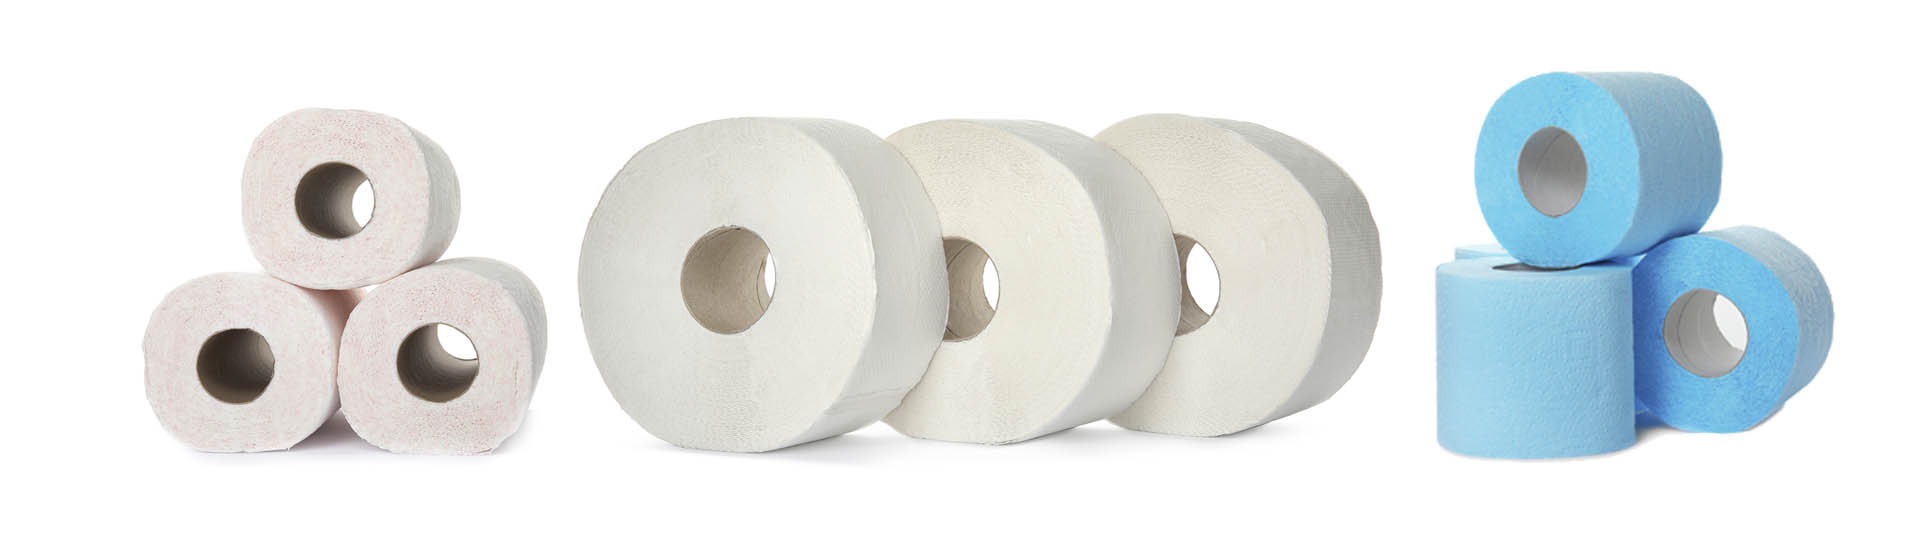 papelmatic-higiene-professional-oferta-productes-paper-fabricants-productes